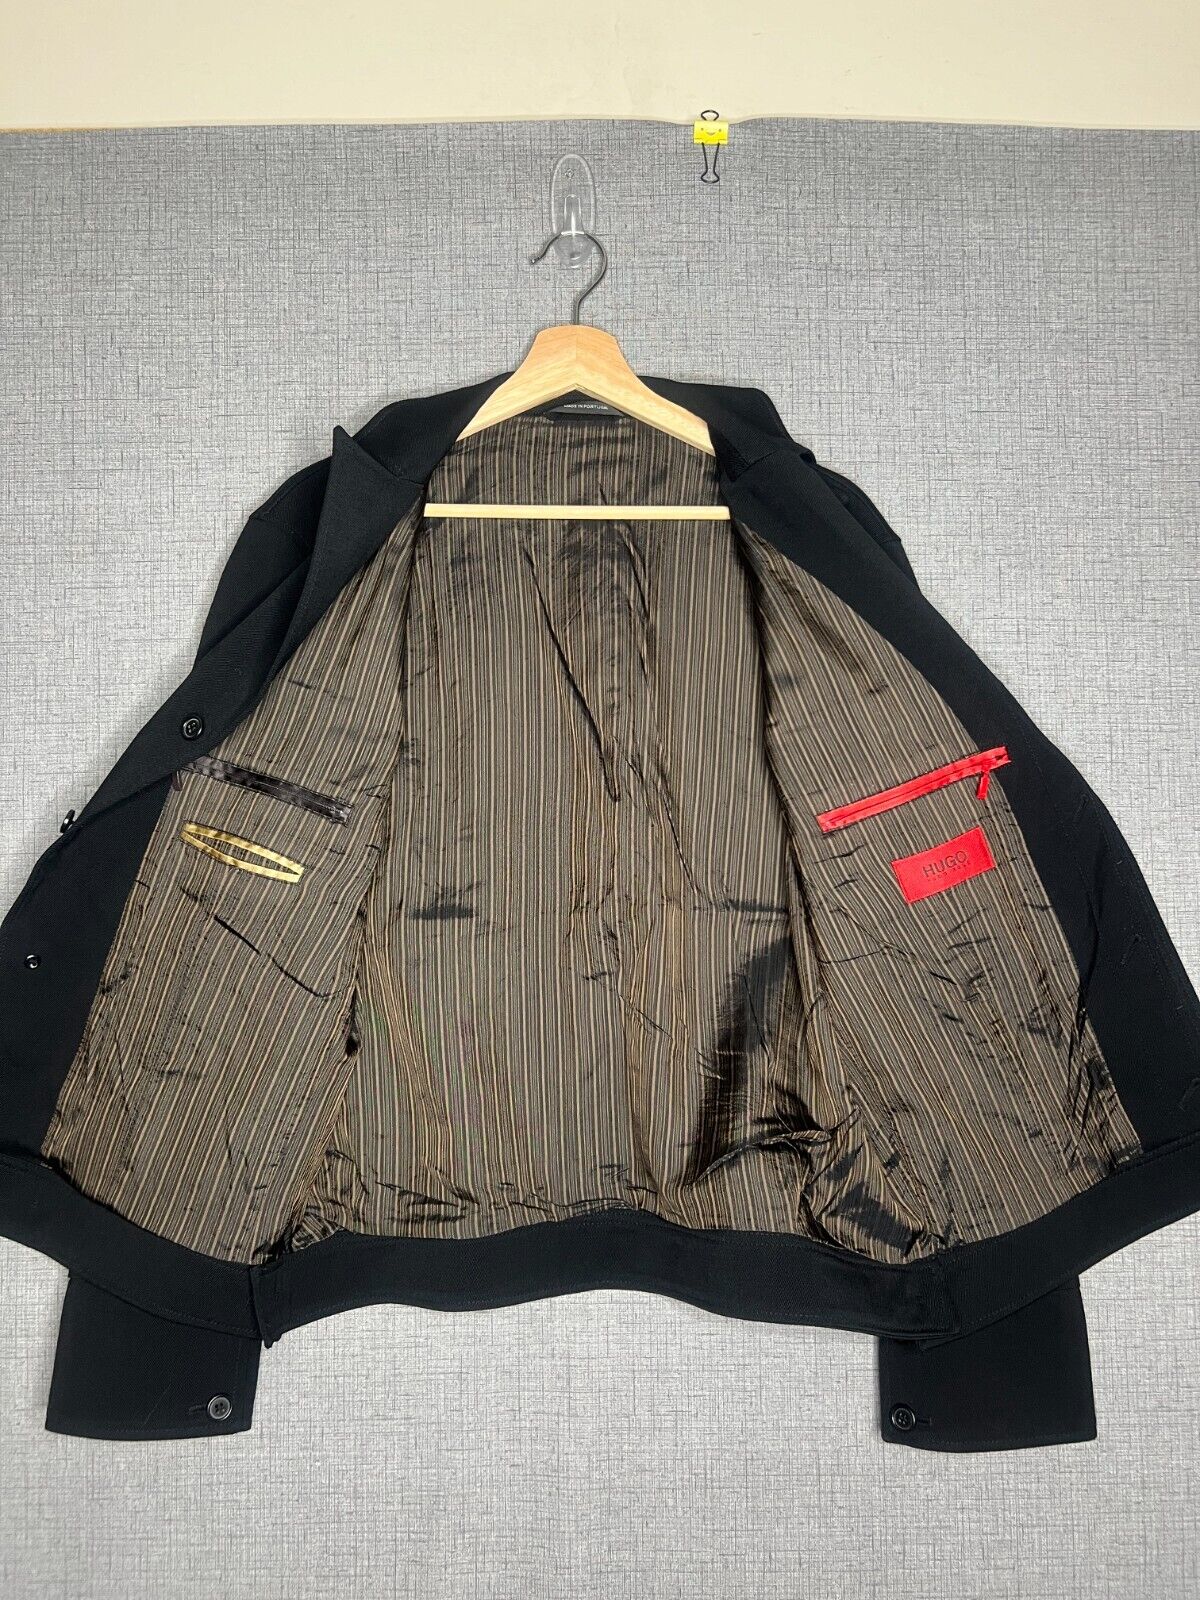 Hugo Boss Bors Jacket Men's XL Black Wool Lined 1… - image 7